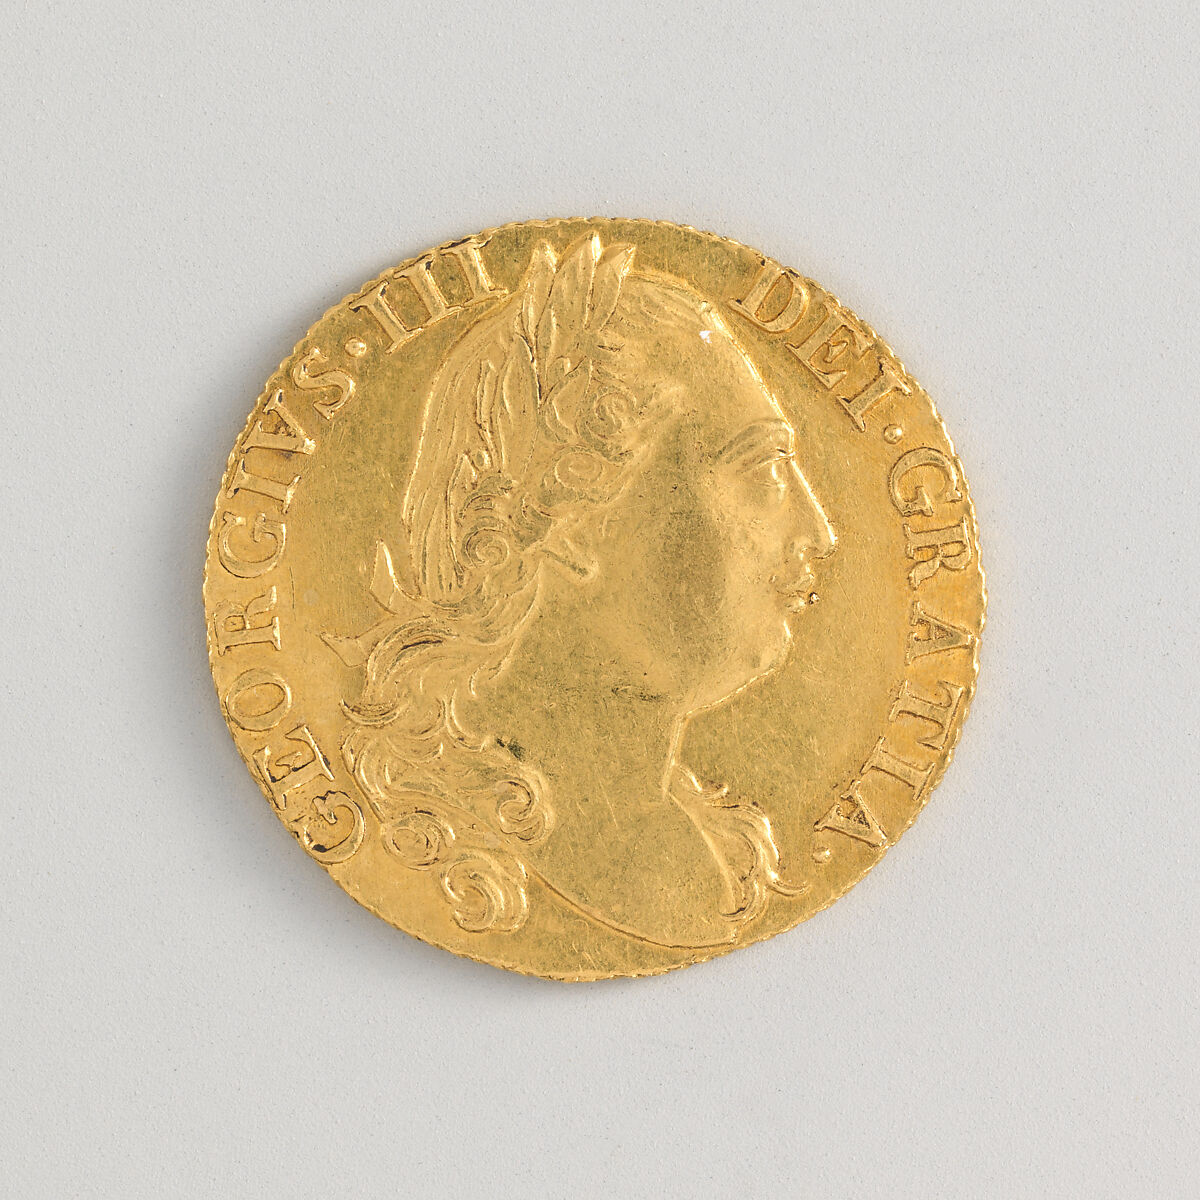 George III guinea, Medalist: Thomas Pingo (Italian, 1692–1776, active England after 1742), Gold, British 